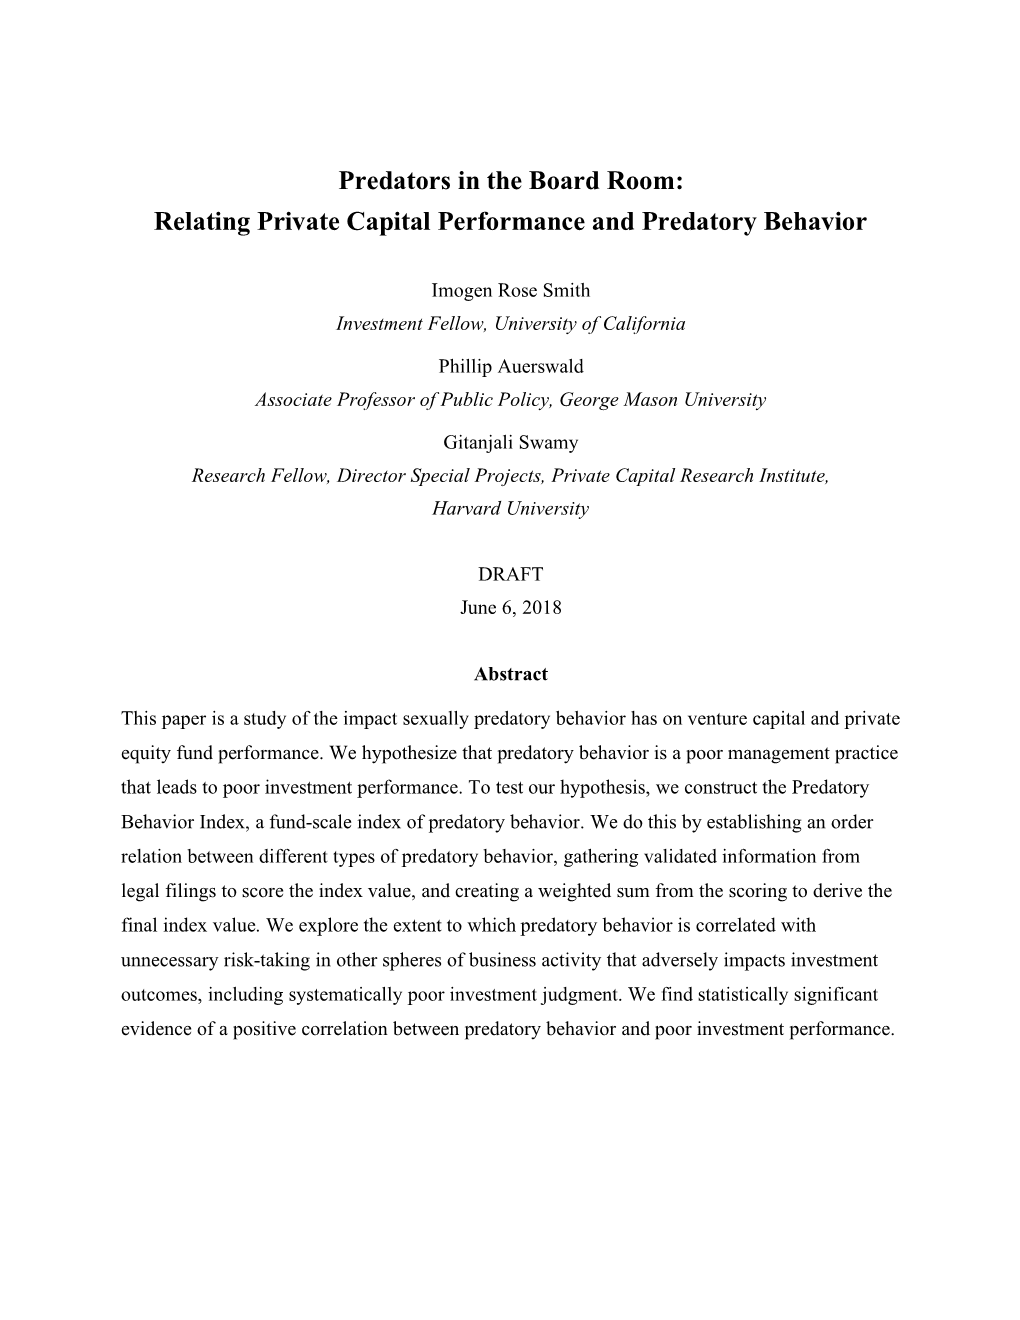 Predators in the Board Room: Relating Private Capital Performance and Predatory Behavior